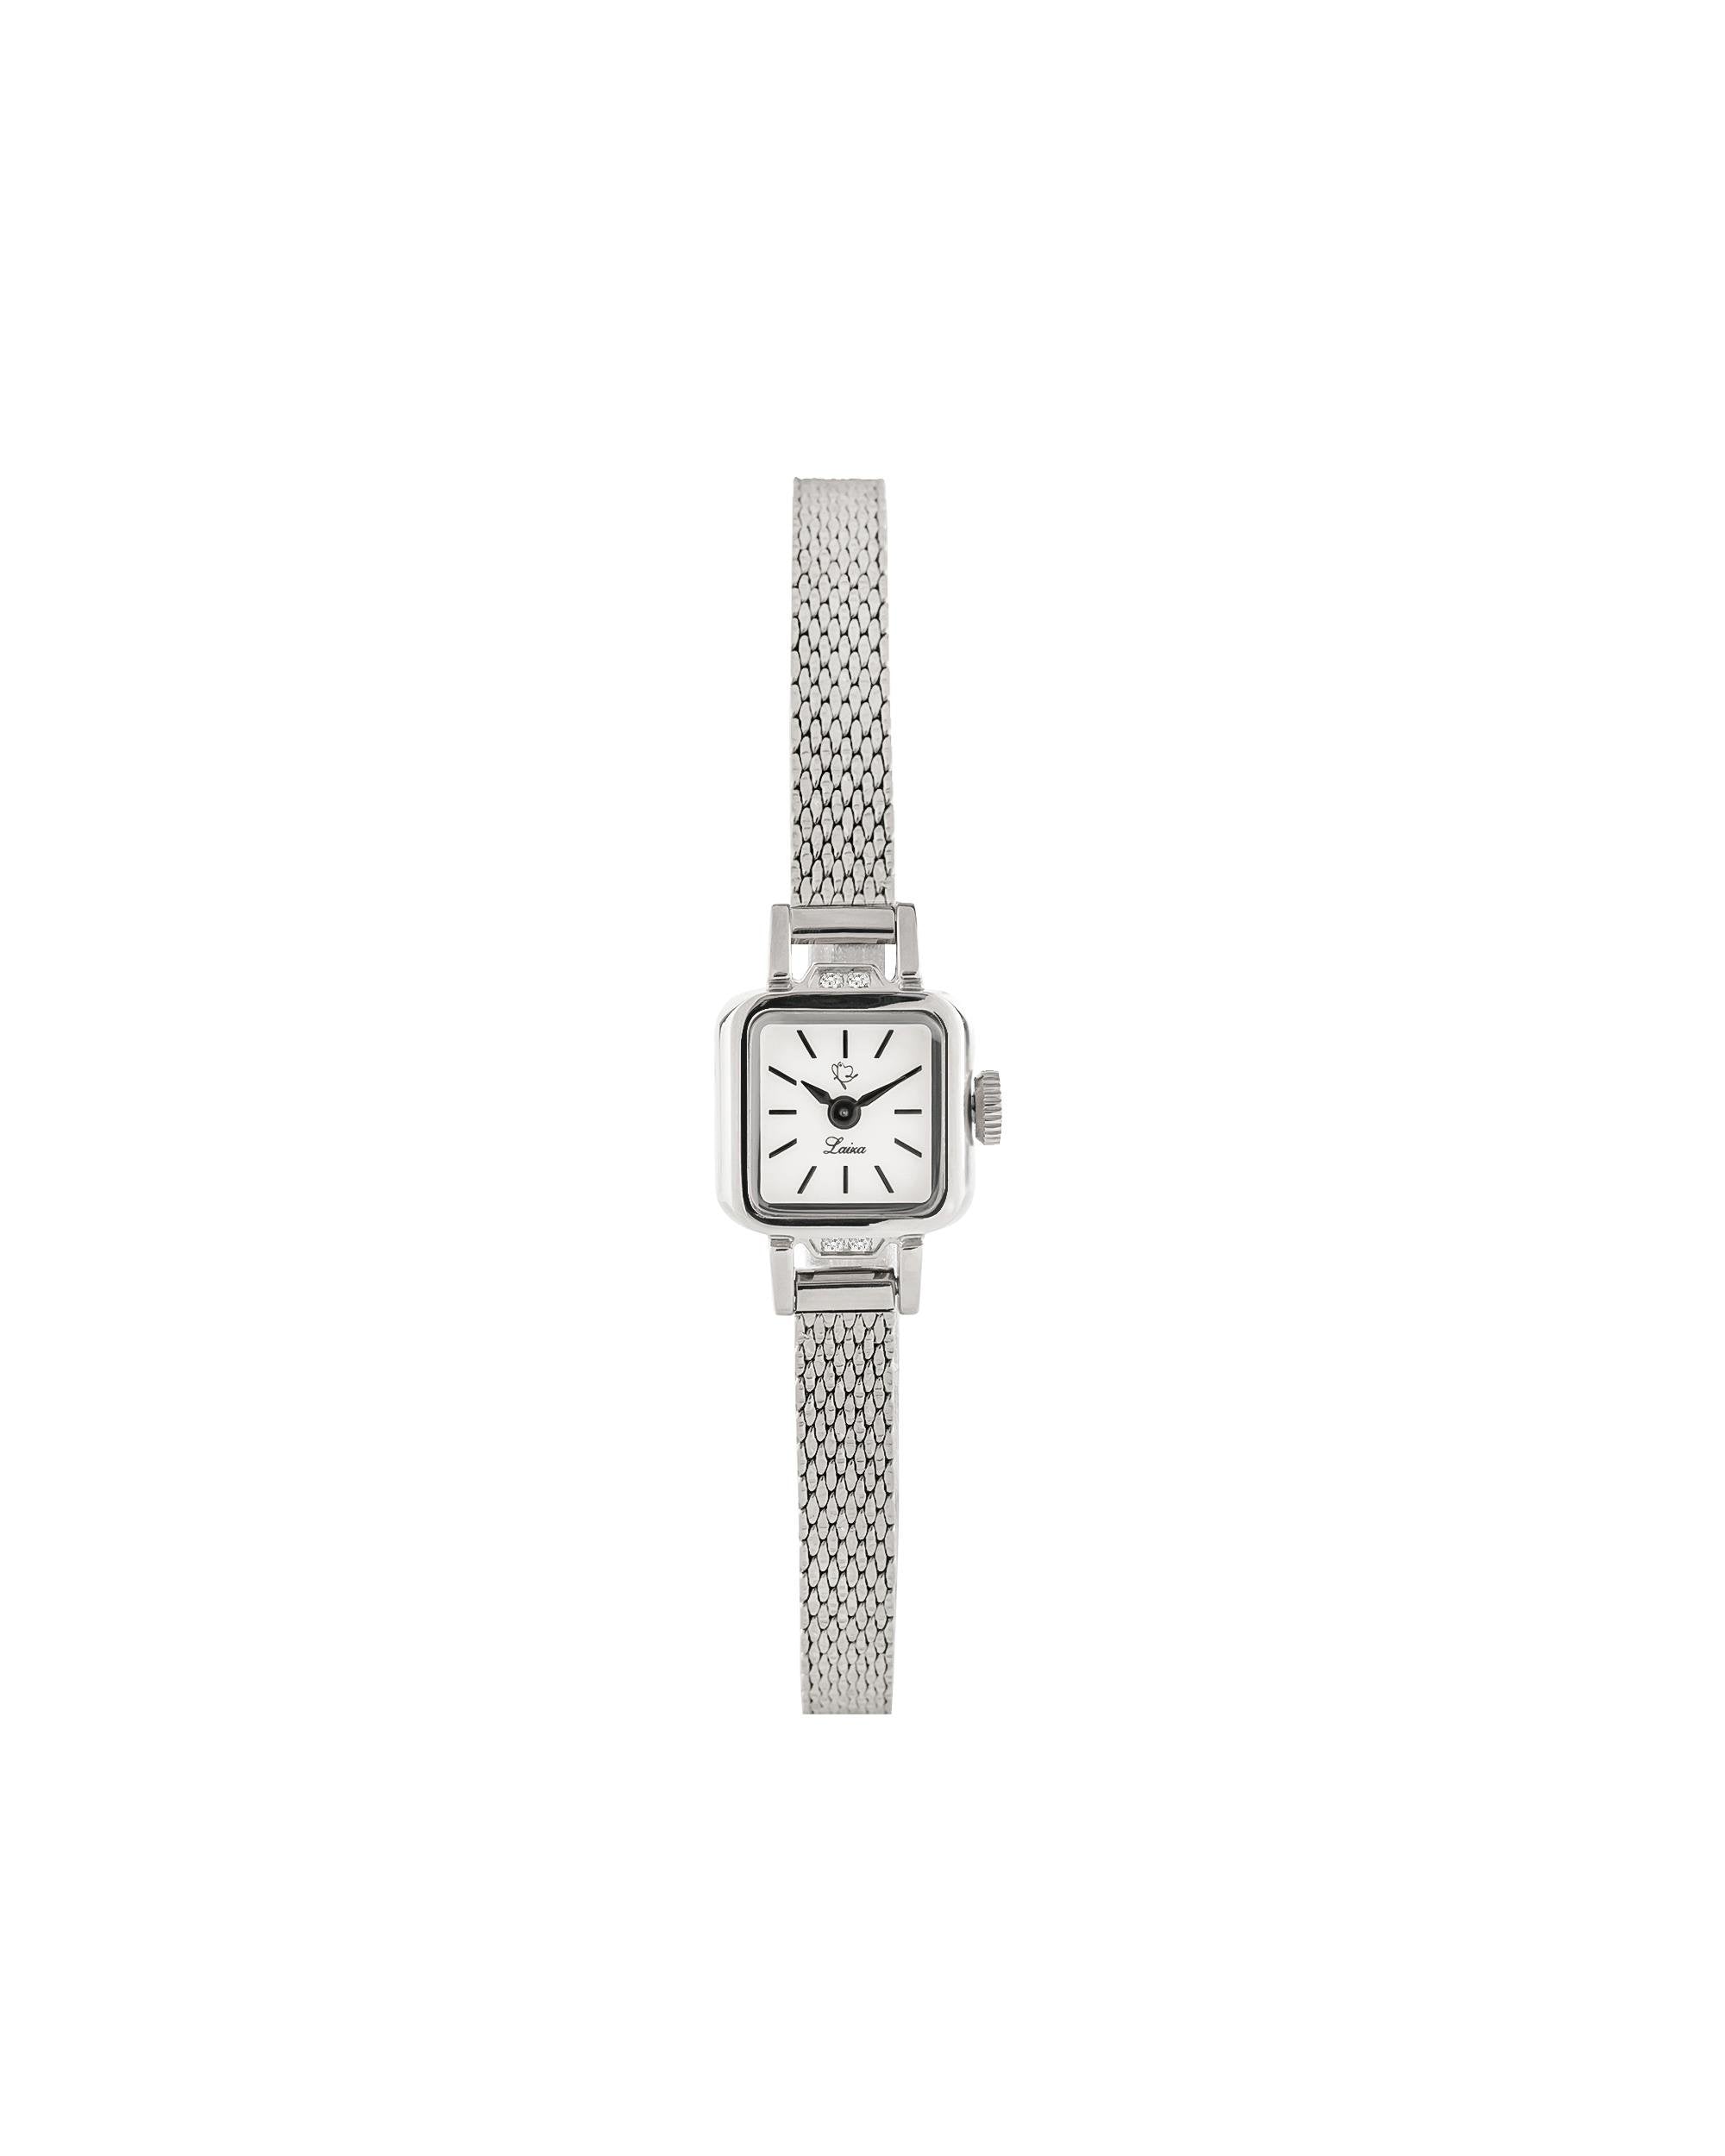 Laiza Contes 1968 Women's Wristwatch LAI-1-1968-01